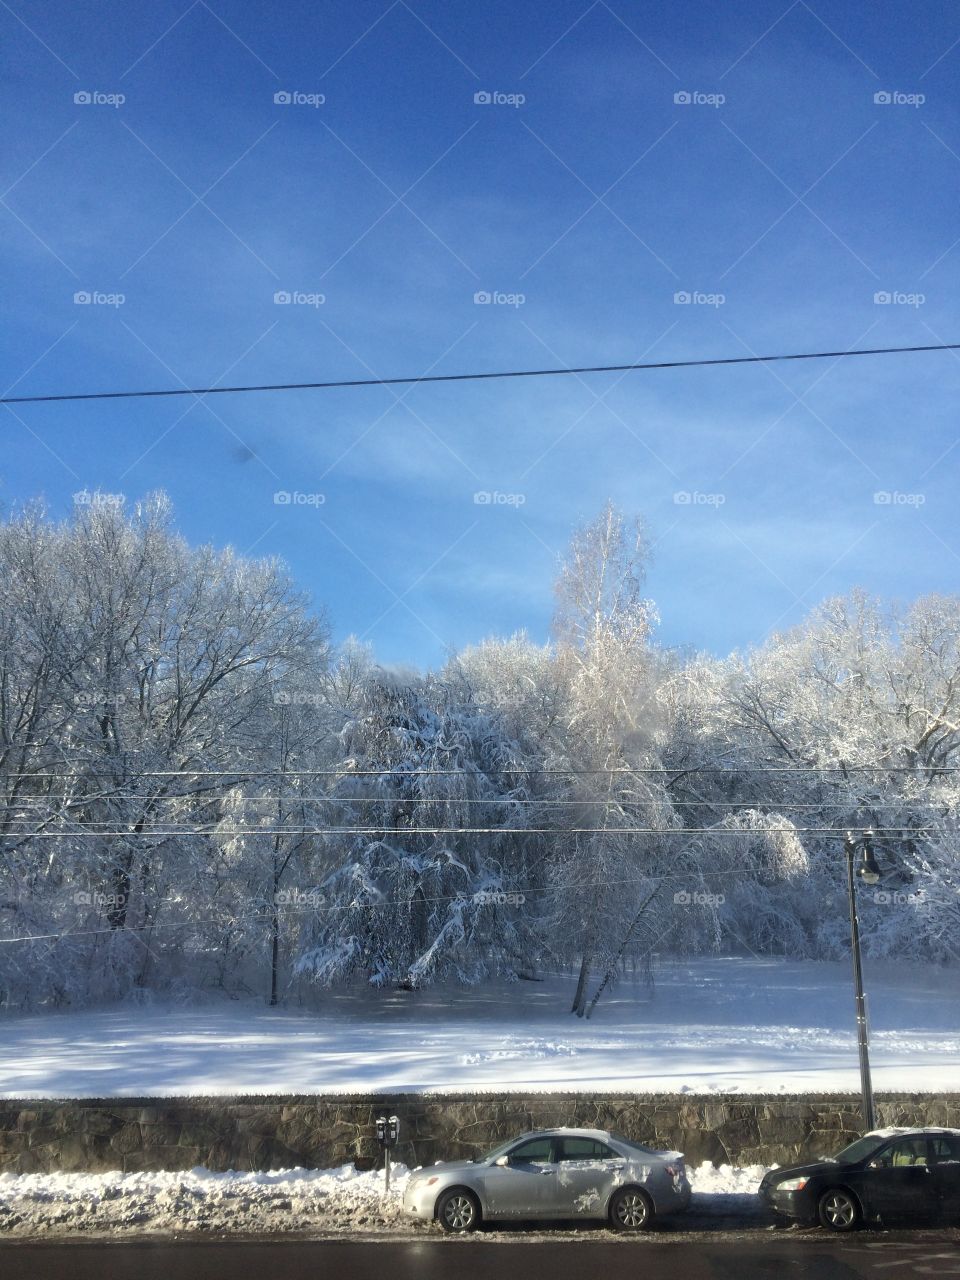 Winter scene in Massachusetts. Snow and trees. 